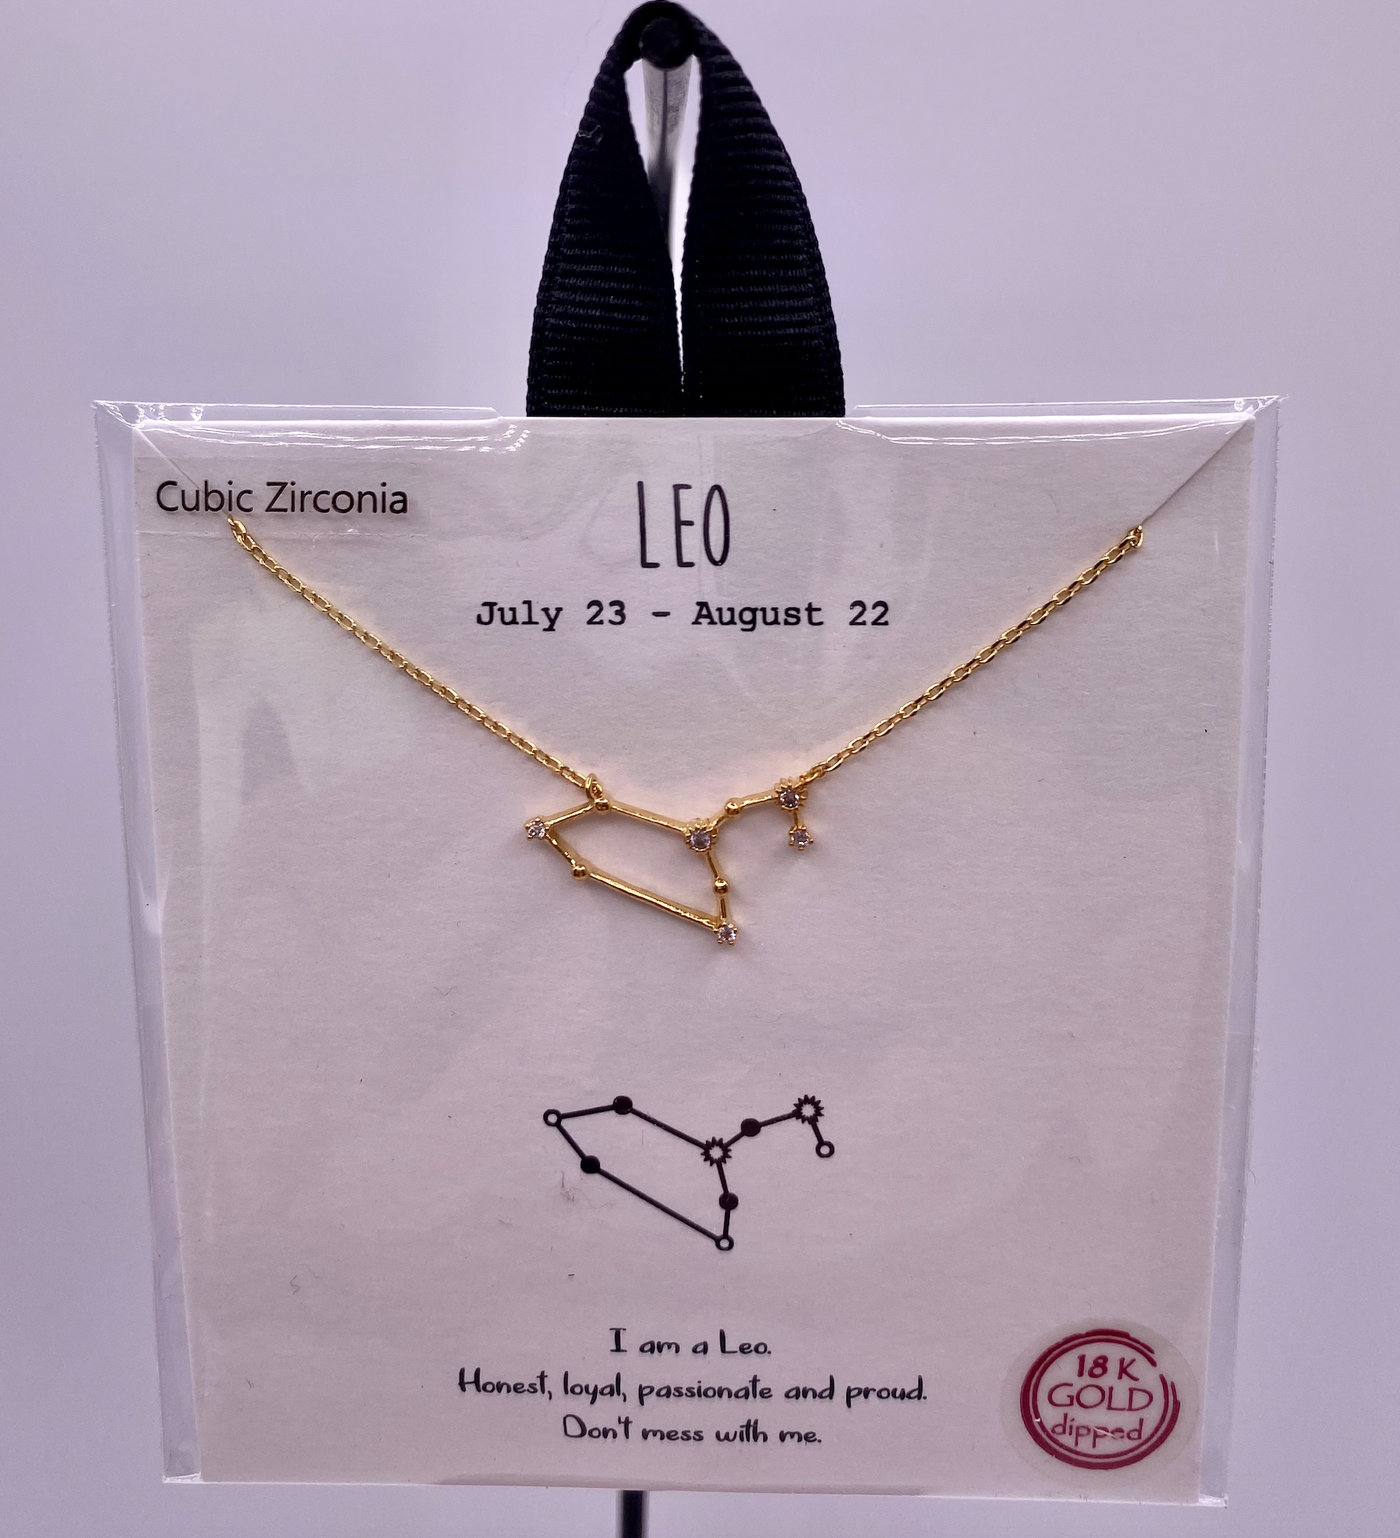 Leo Zodiac Sign Necklace July 23 - August 22